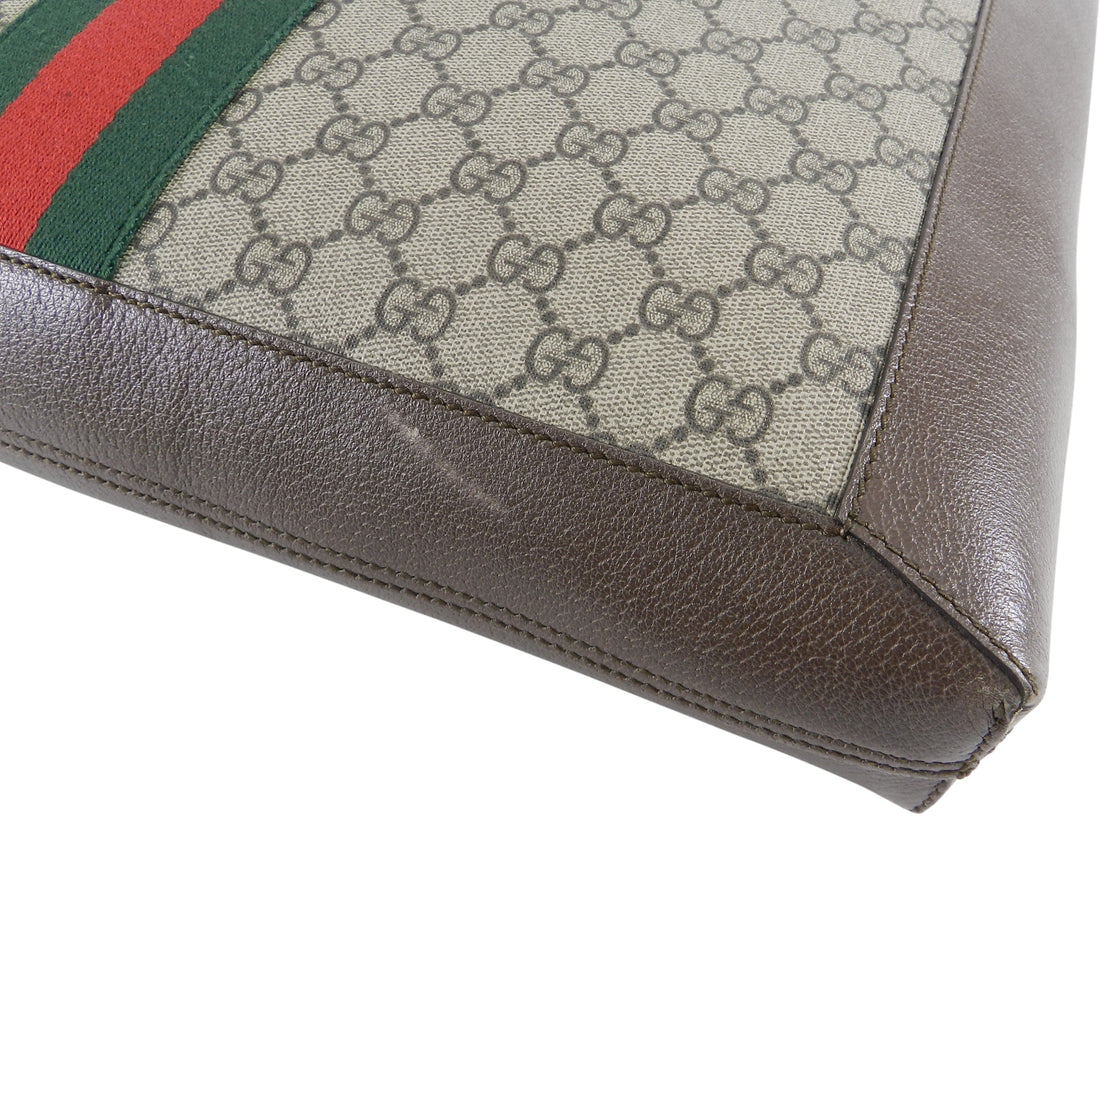 Gucci Ophidia Brown Monogram Soft GG Supreme Large Tote Bag